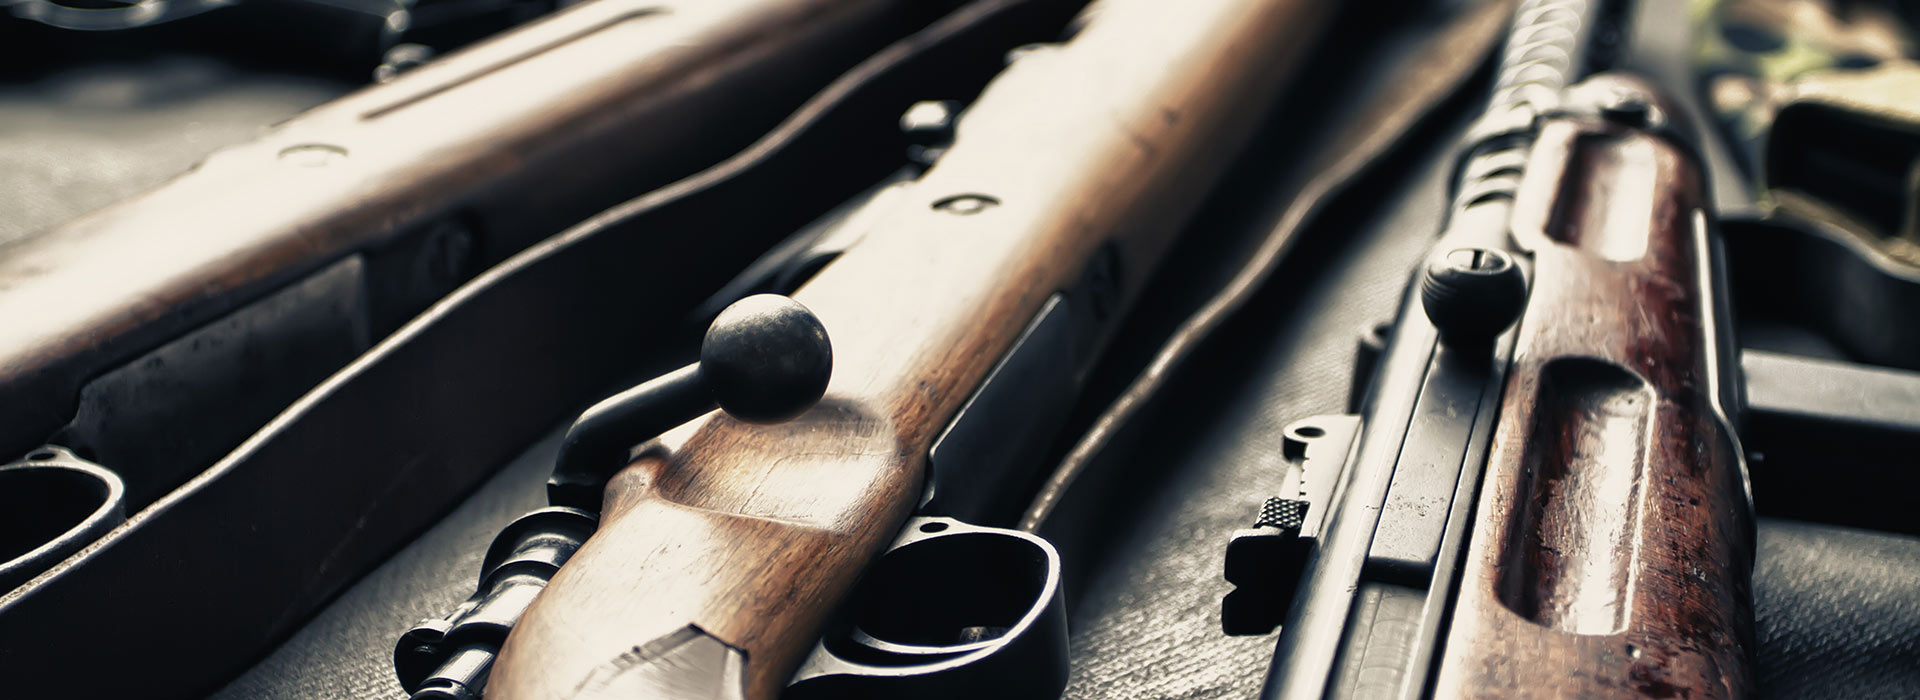 How to Decentralize Your Gun Storage